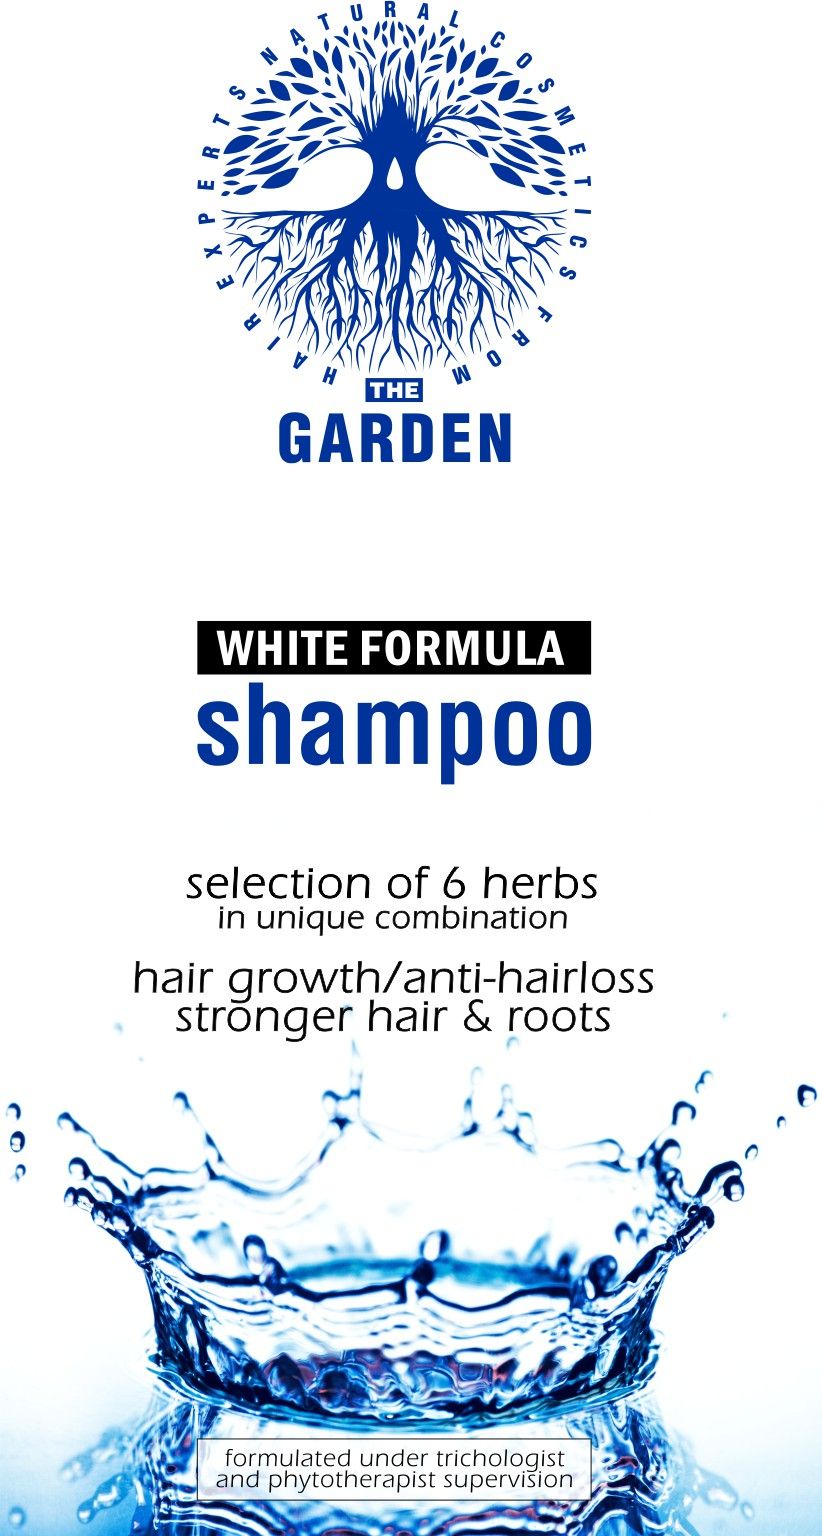 The GARDEN white formula shampoo